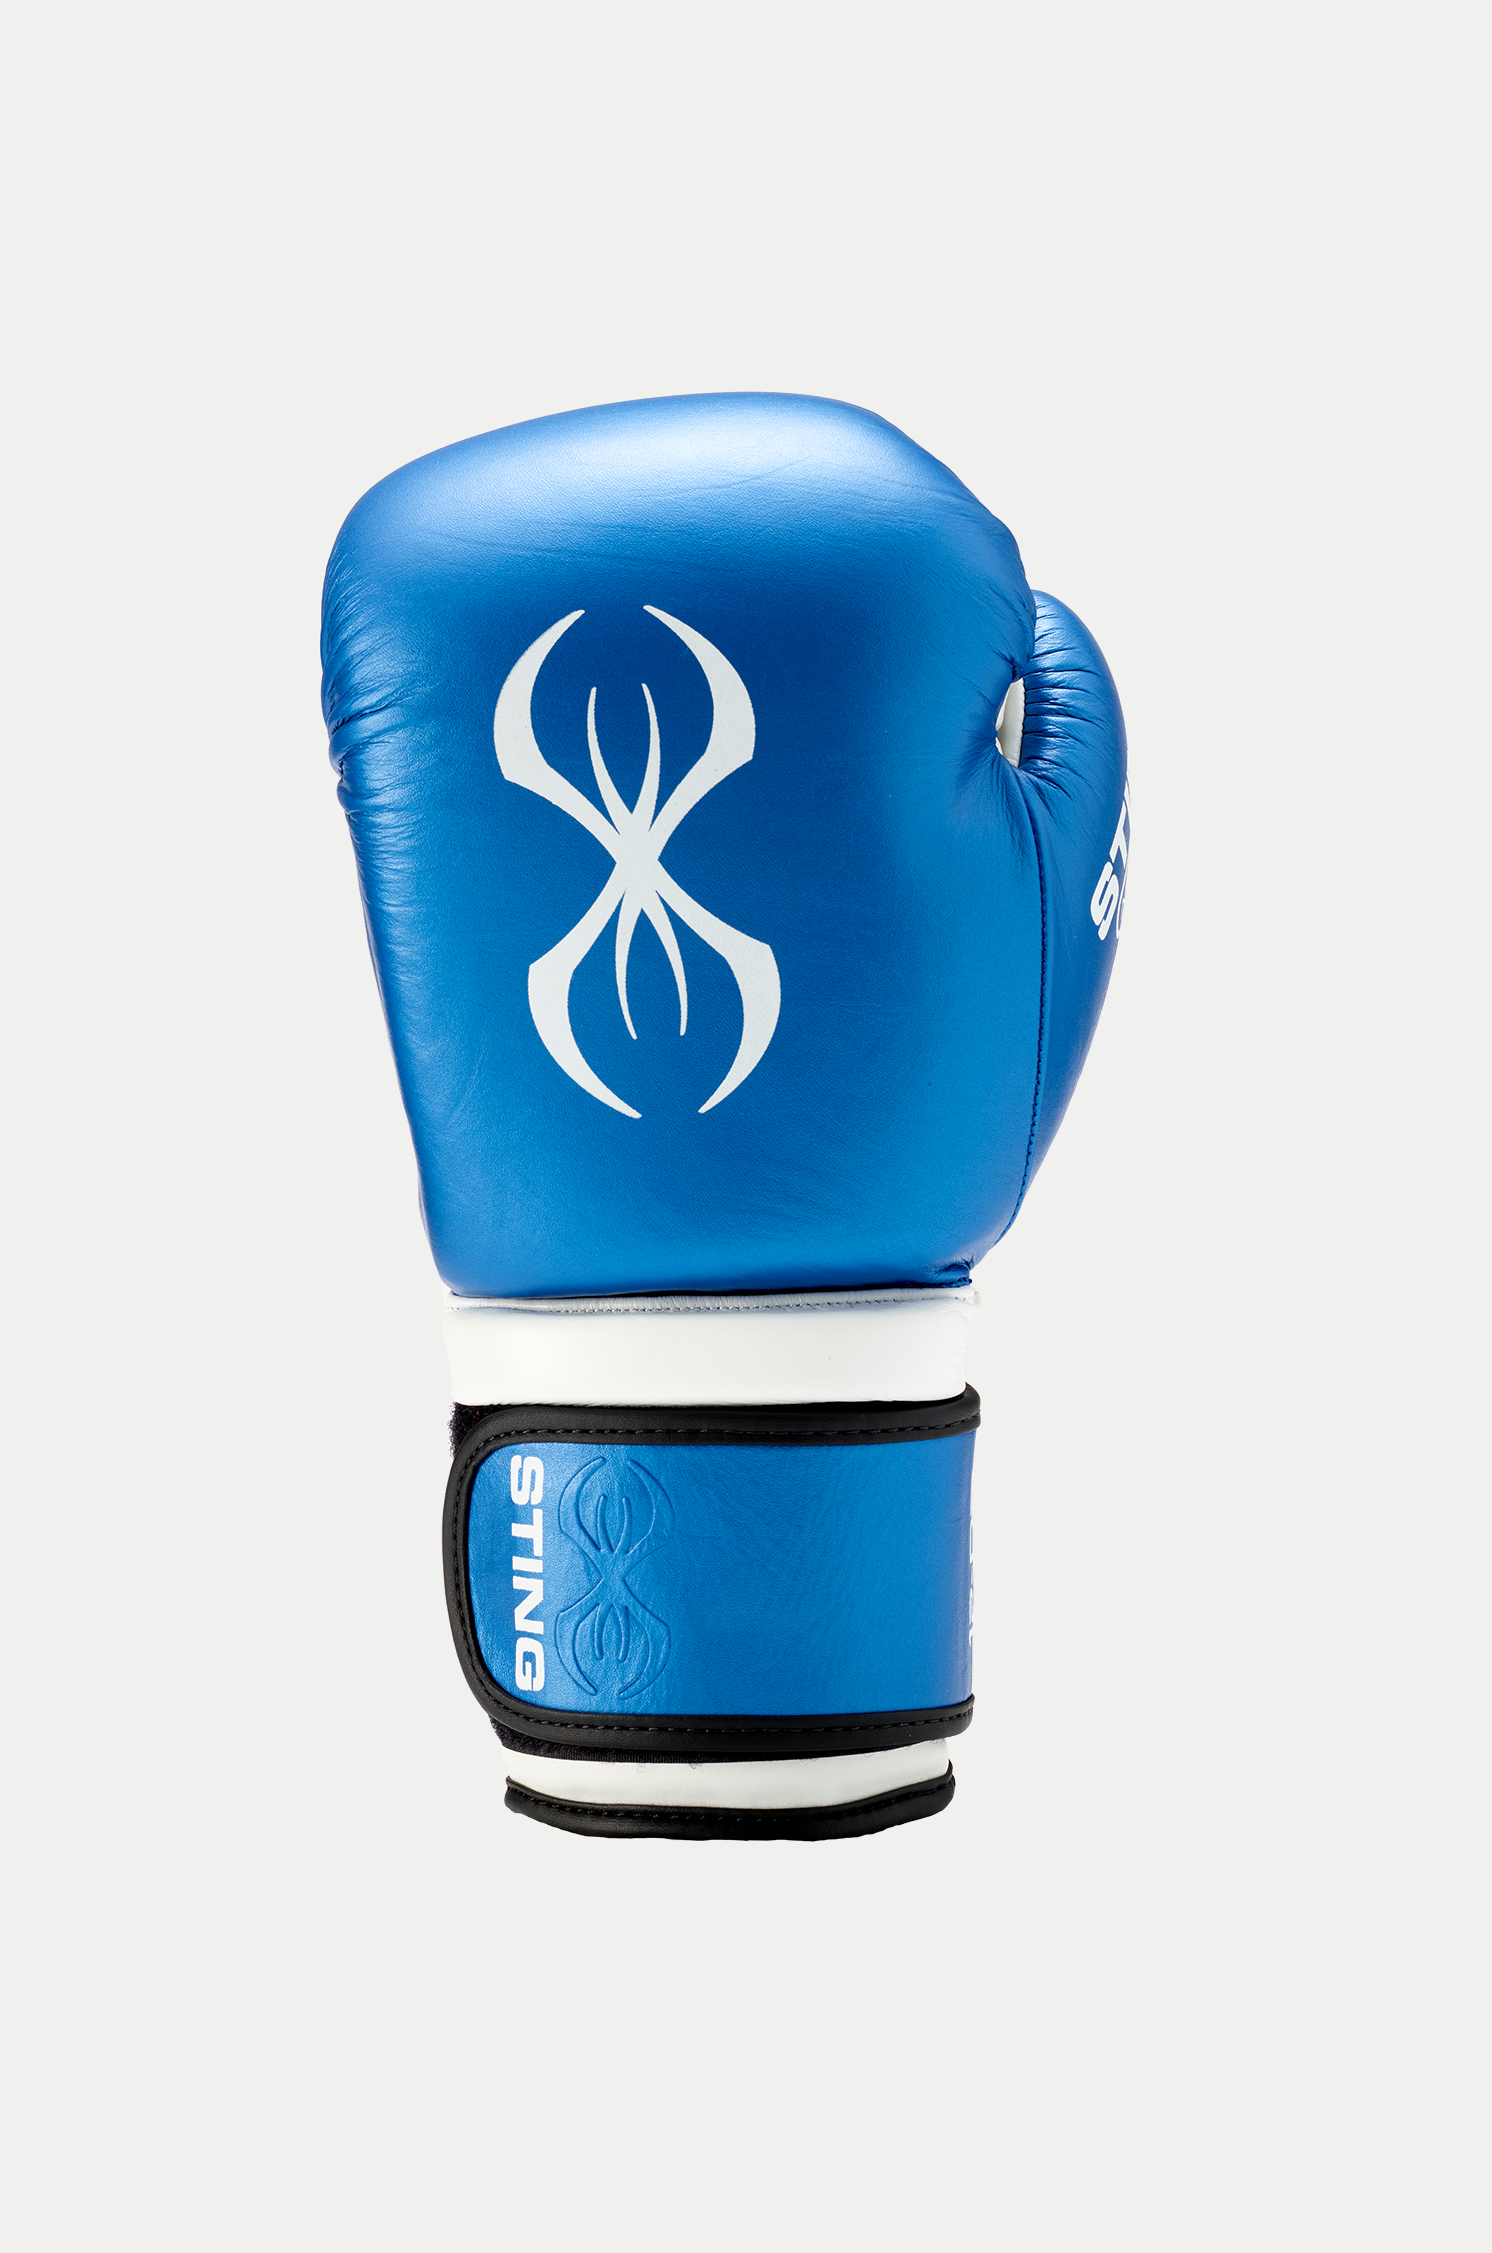 Armapro Boxing Gloves